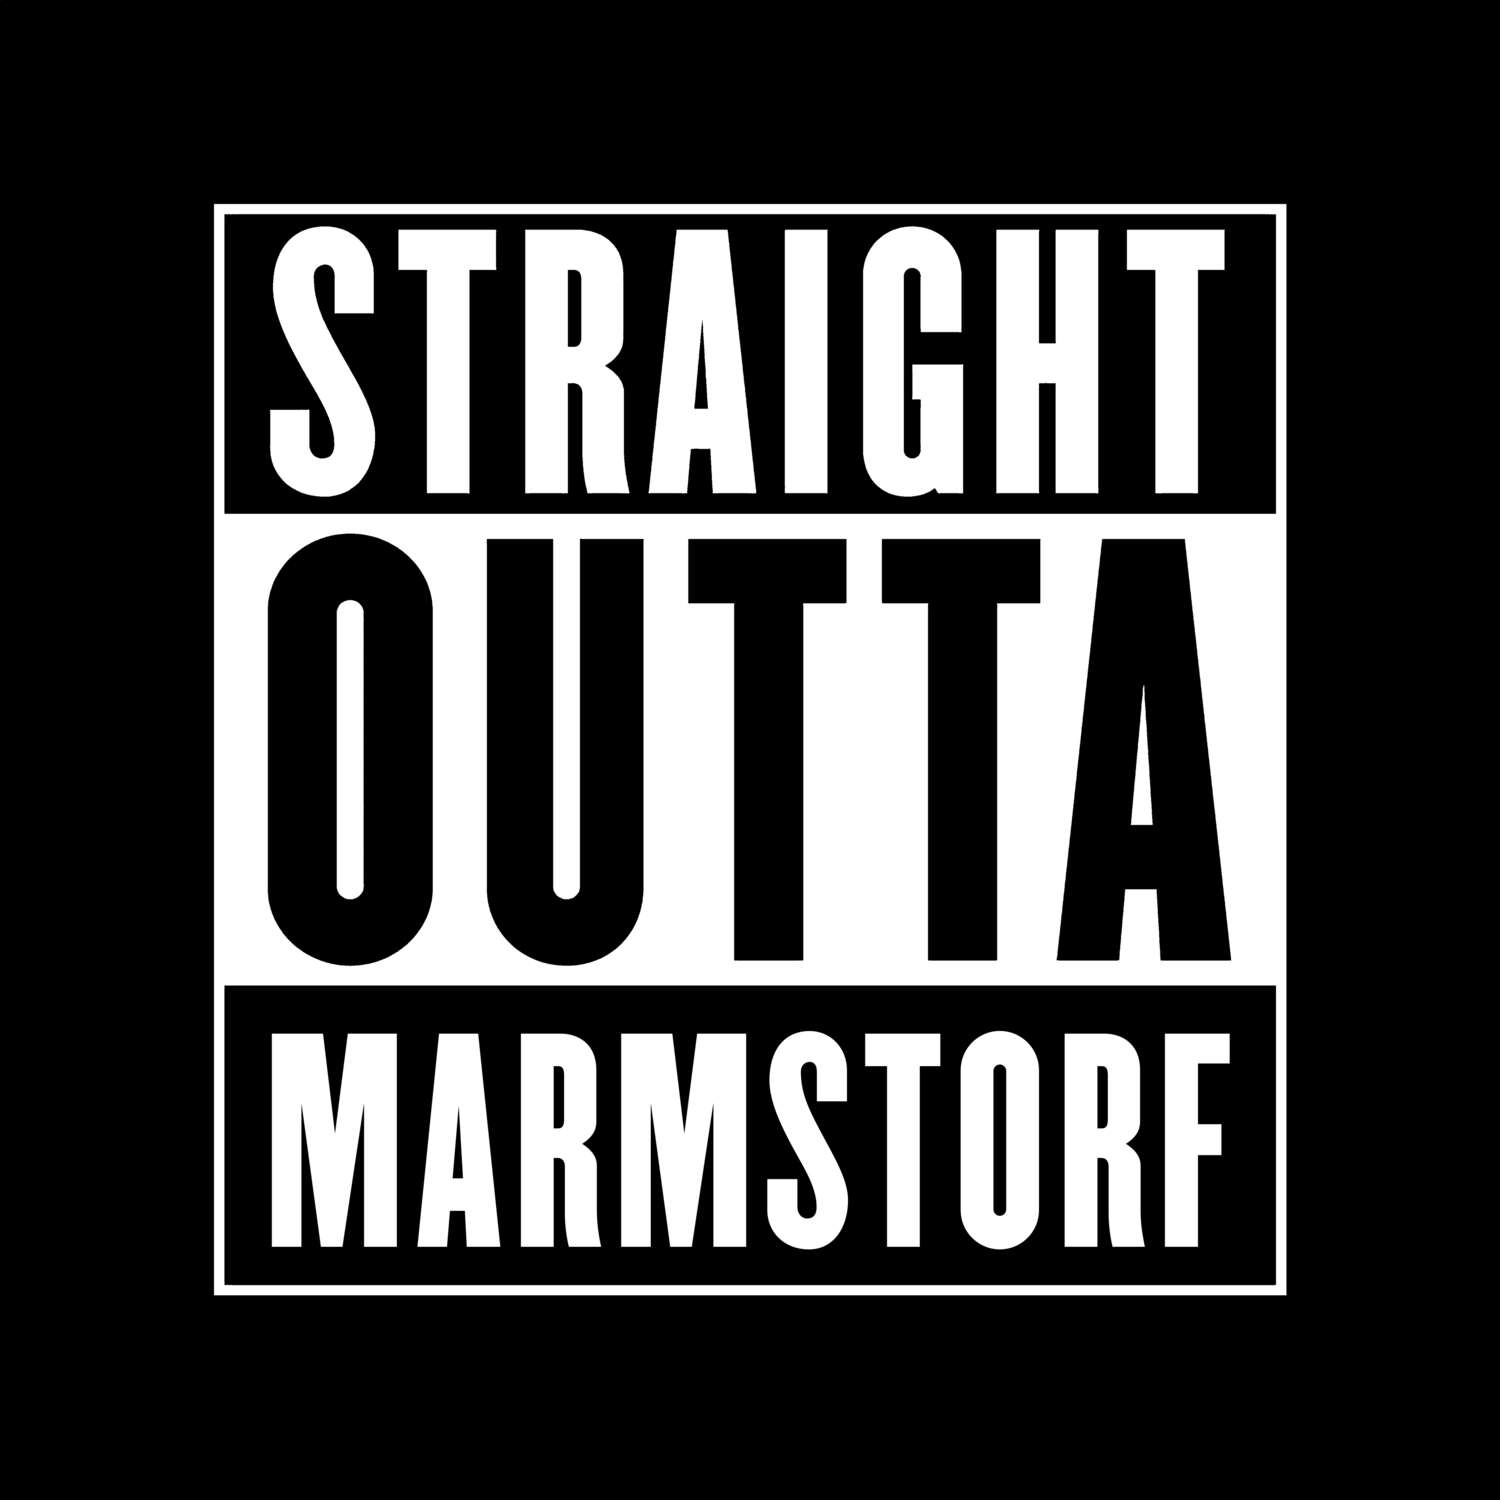 Marmstorf T-Shirt »Straight Outta«